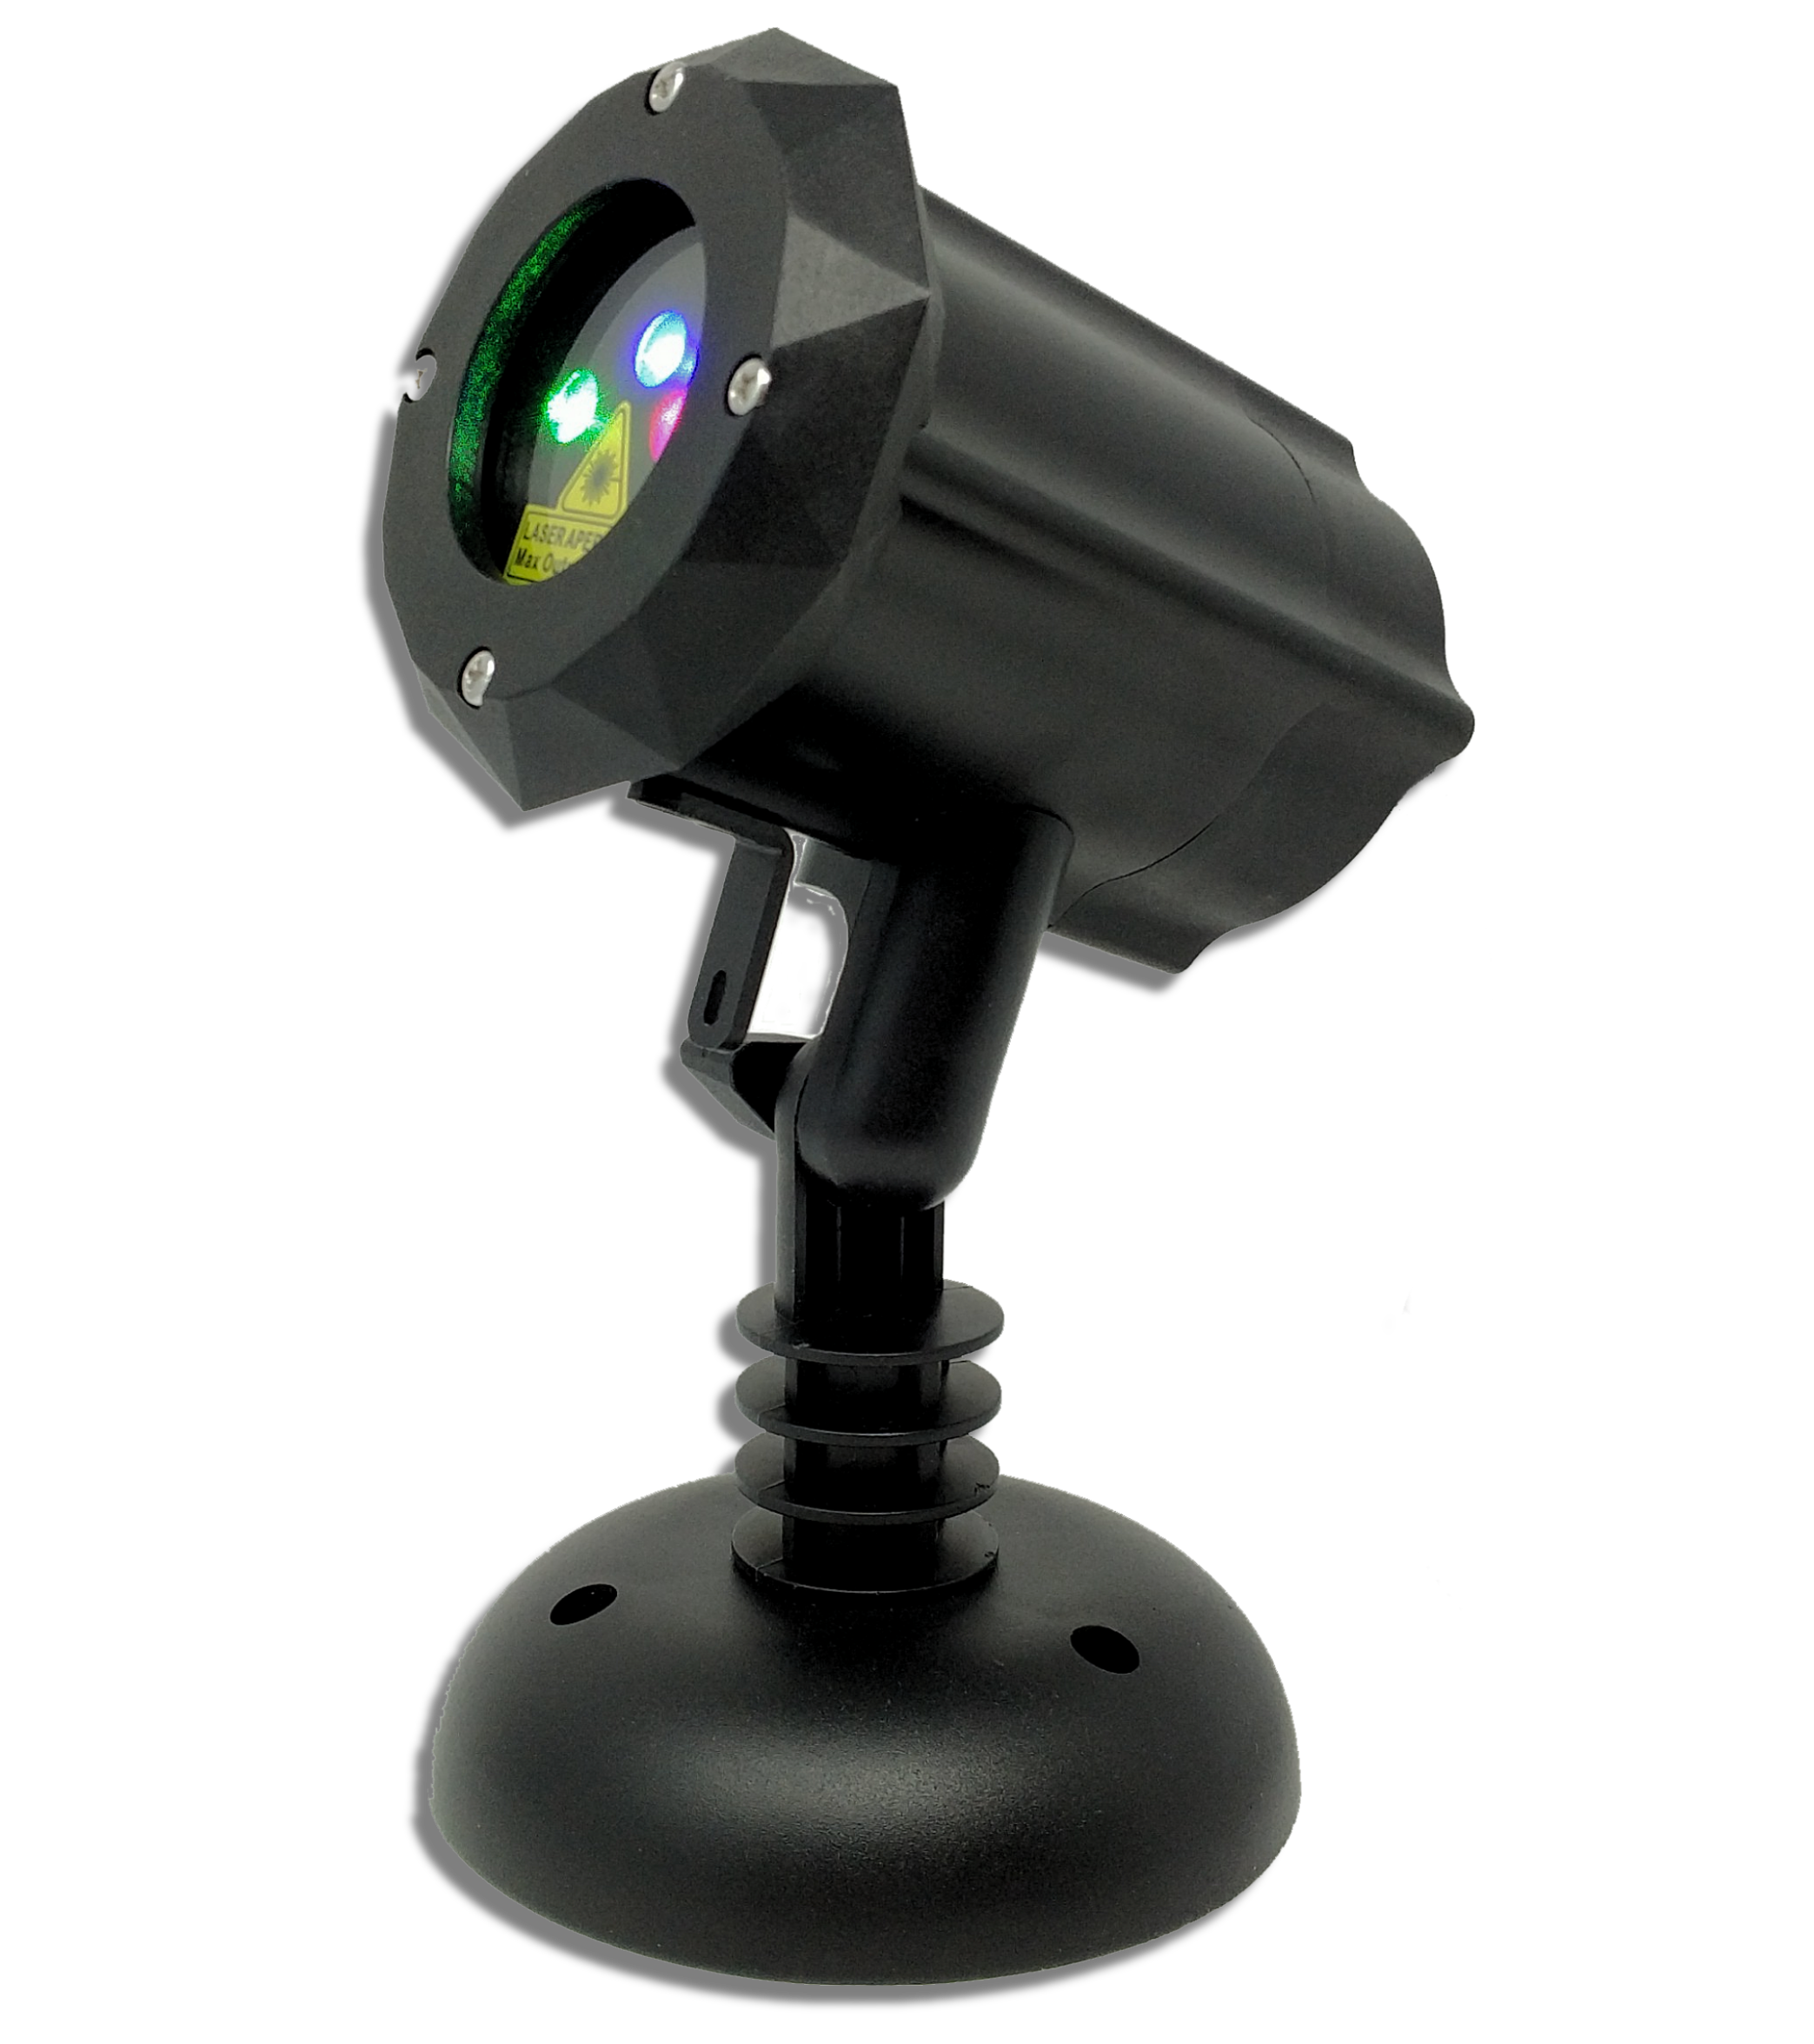 SL-33 - RGB Moving Firefly Laser Christmas Light | 2nd GEN v2 - Spectrum Laser Lights